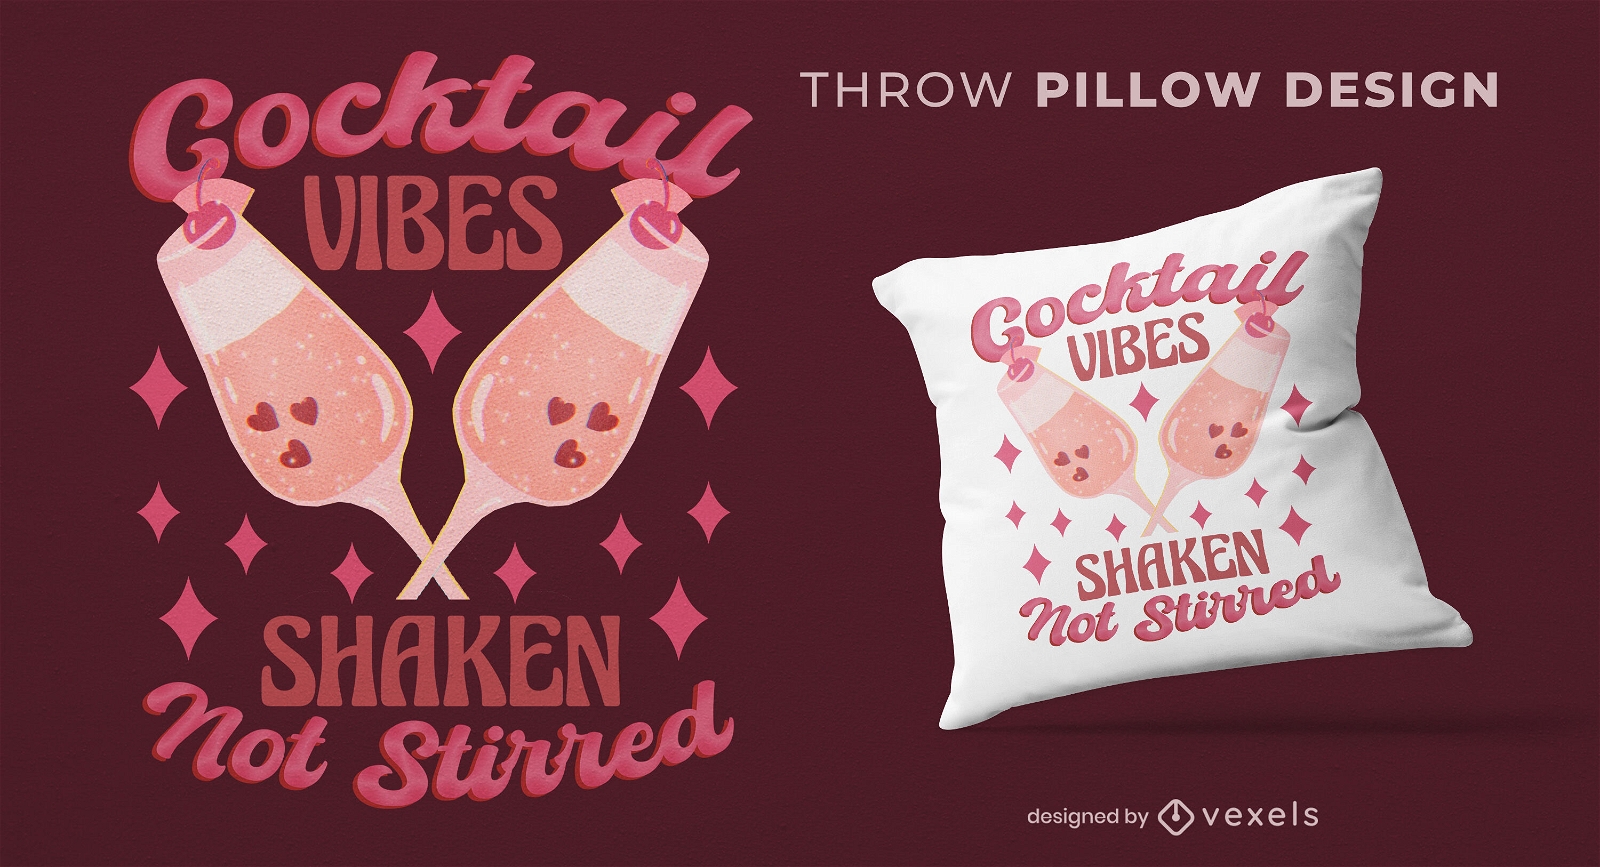 Cocktail vibes throw pillow design